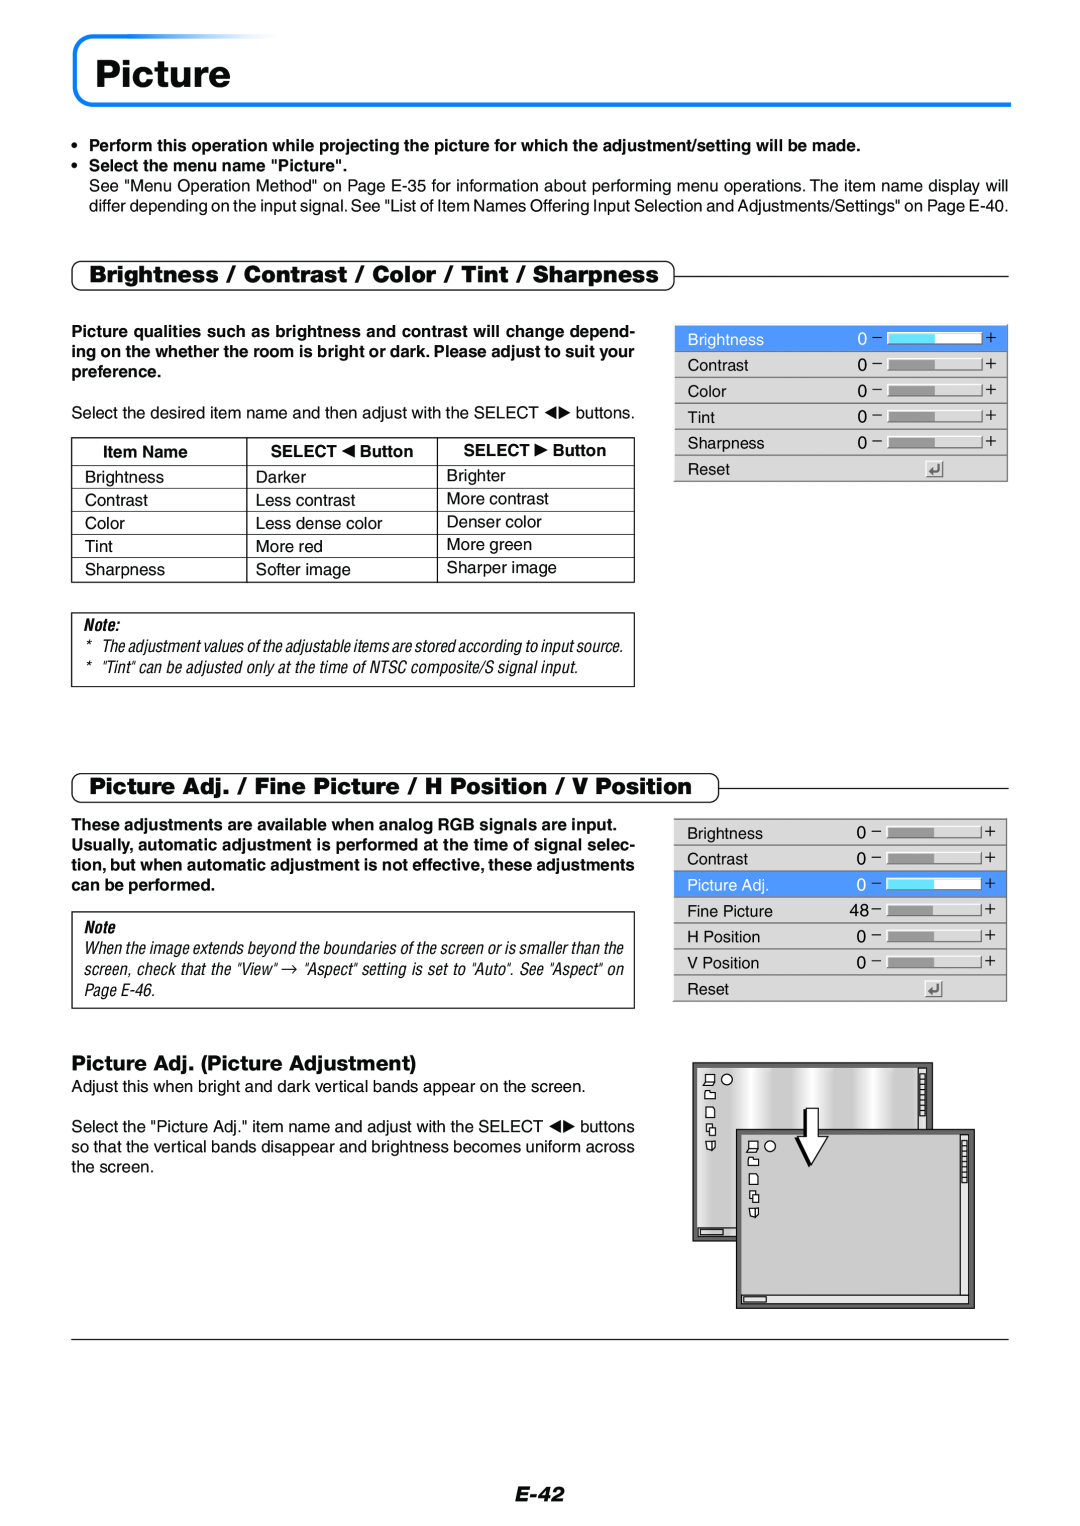 PLUS Vision Data Projector Brightness / Contrast / Color / Tint / Sharpness, Picture Adj. Picture Adjustment, E-42 